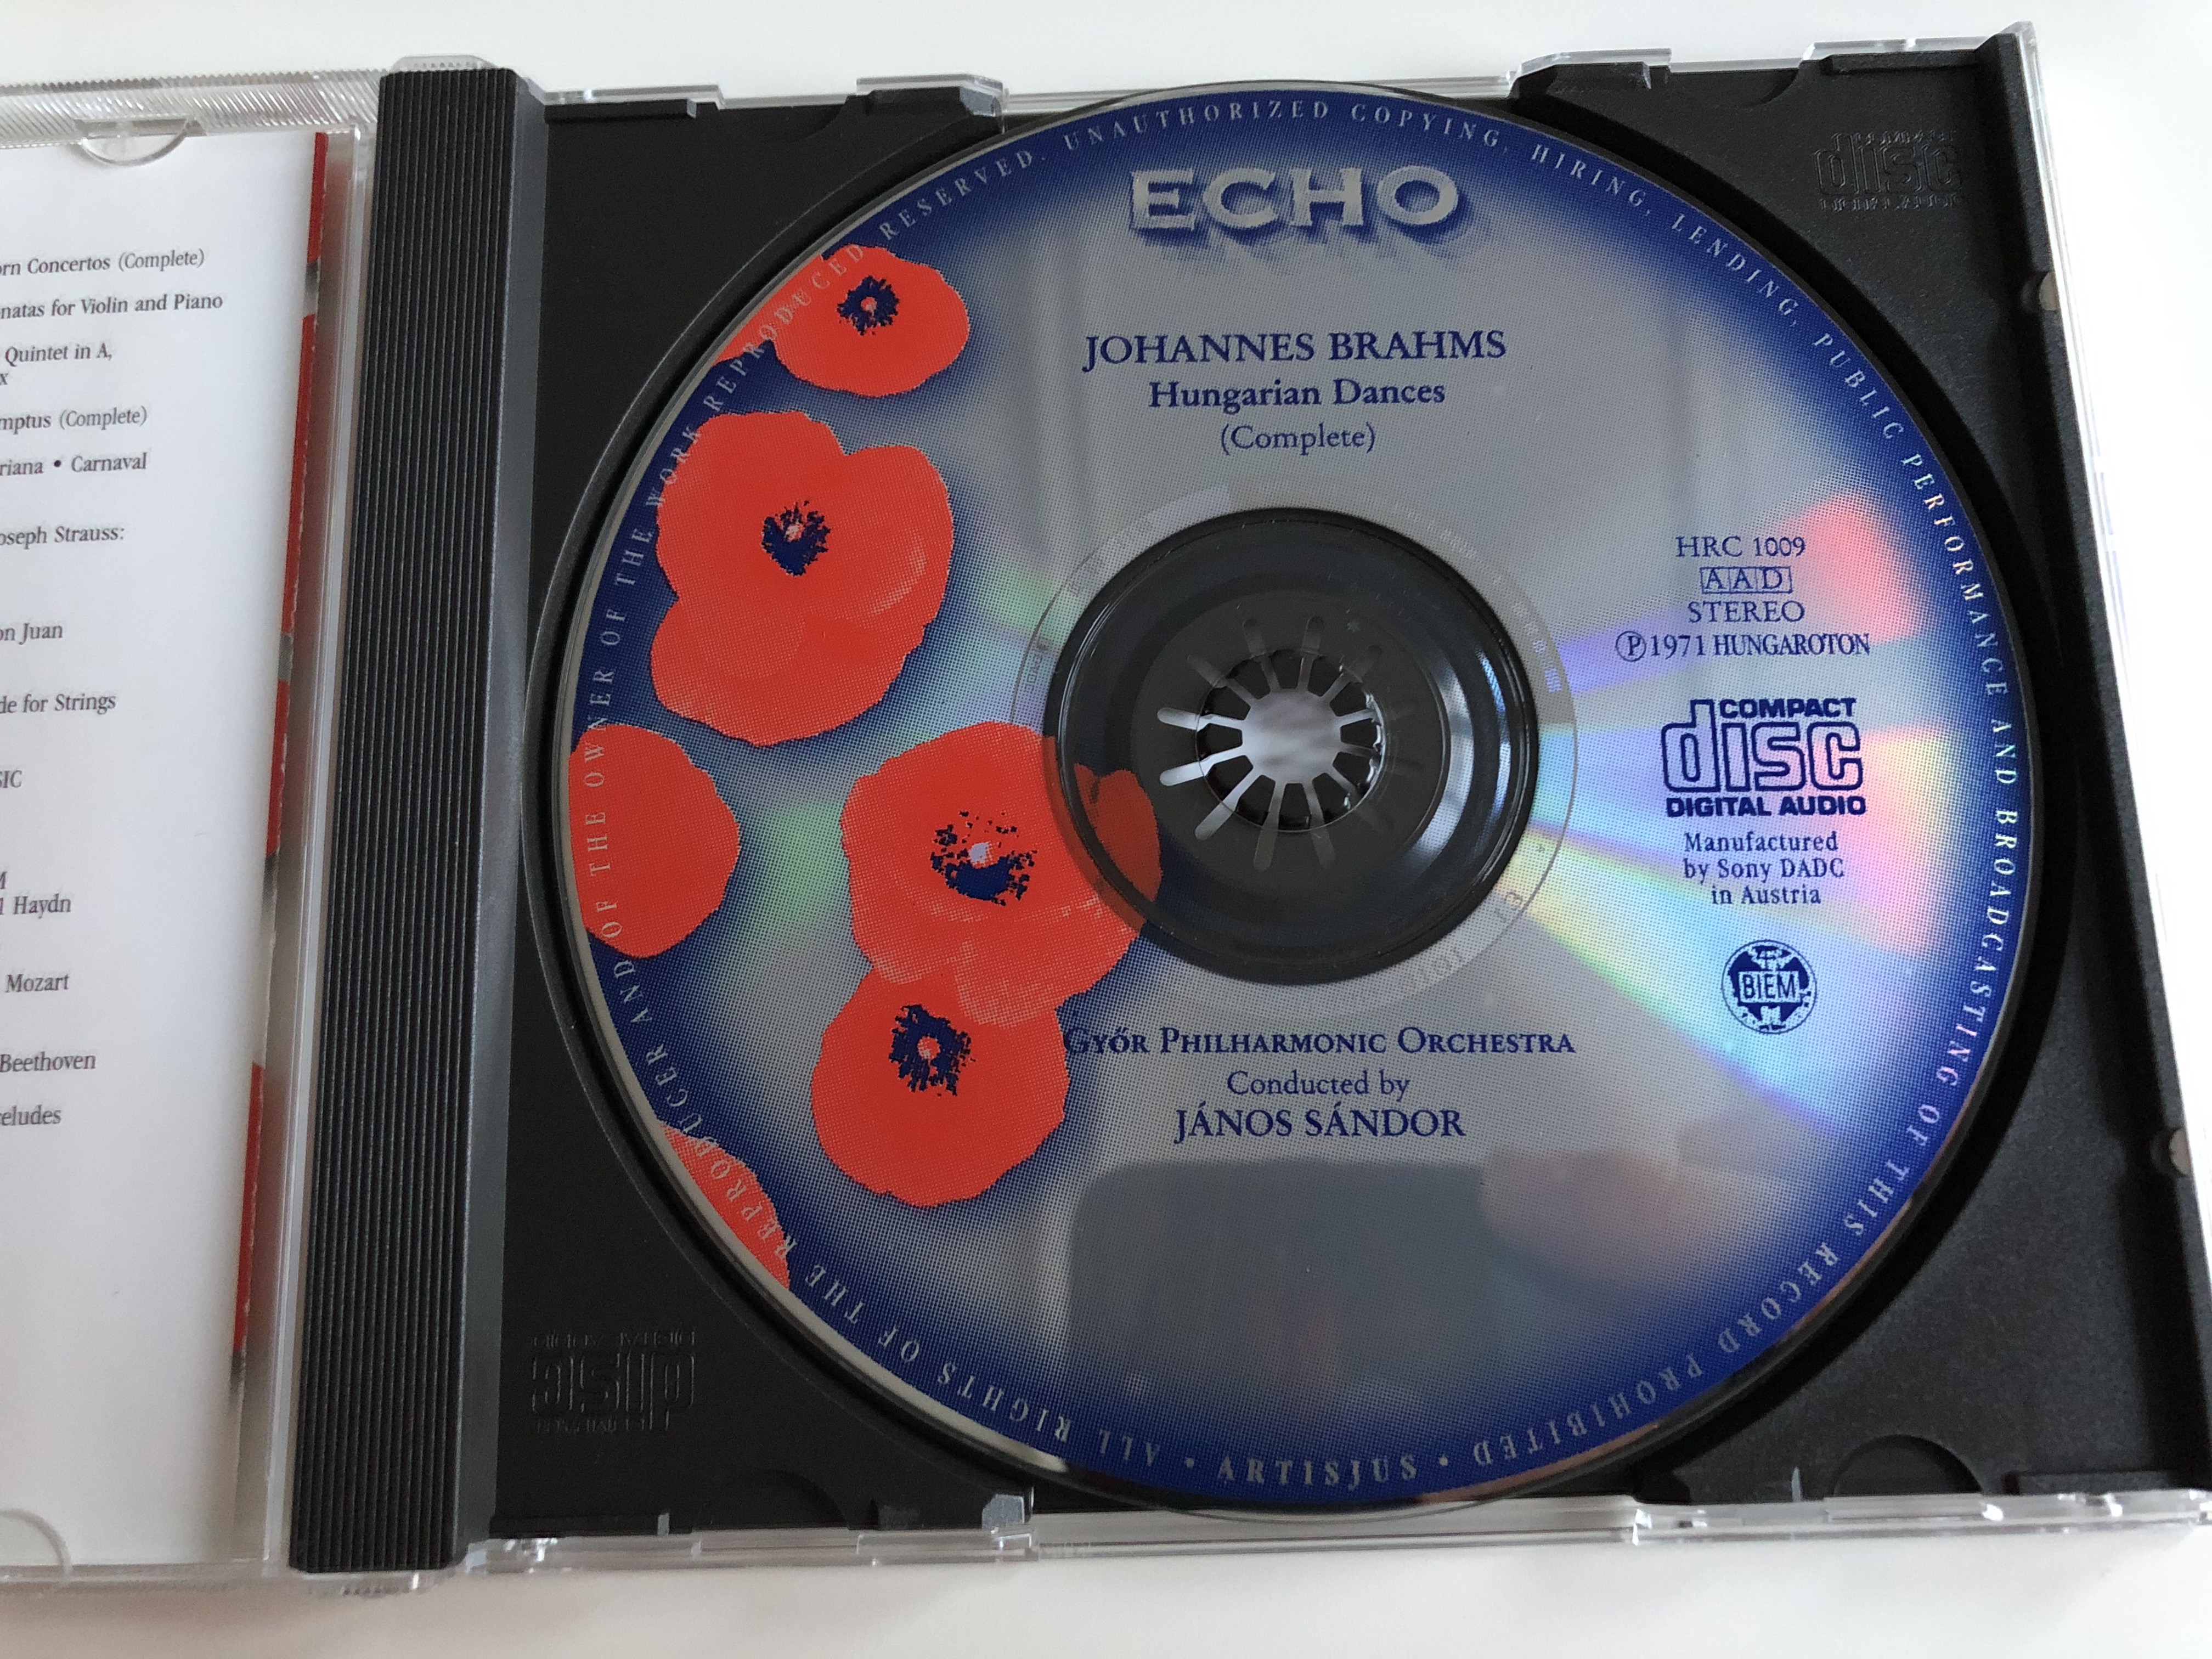 brahms-hungarian-dances-gyor-philharmonic-orchestra-janos-sandor-hungaroton-echo-collection-hungaroton-classic-audio-cd-1999-stereo-hrc-1009-3-.jpg